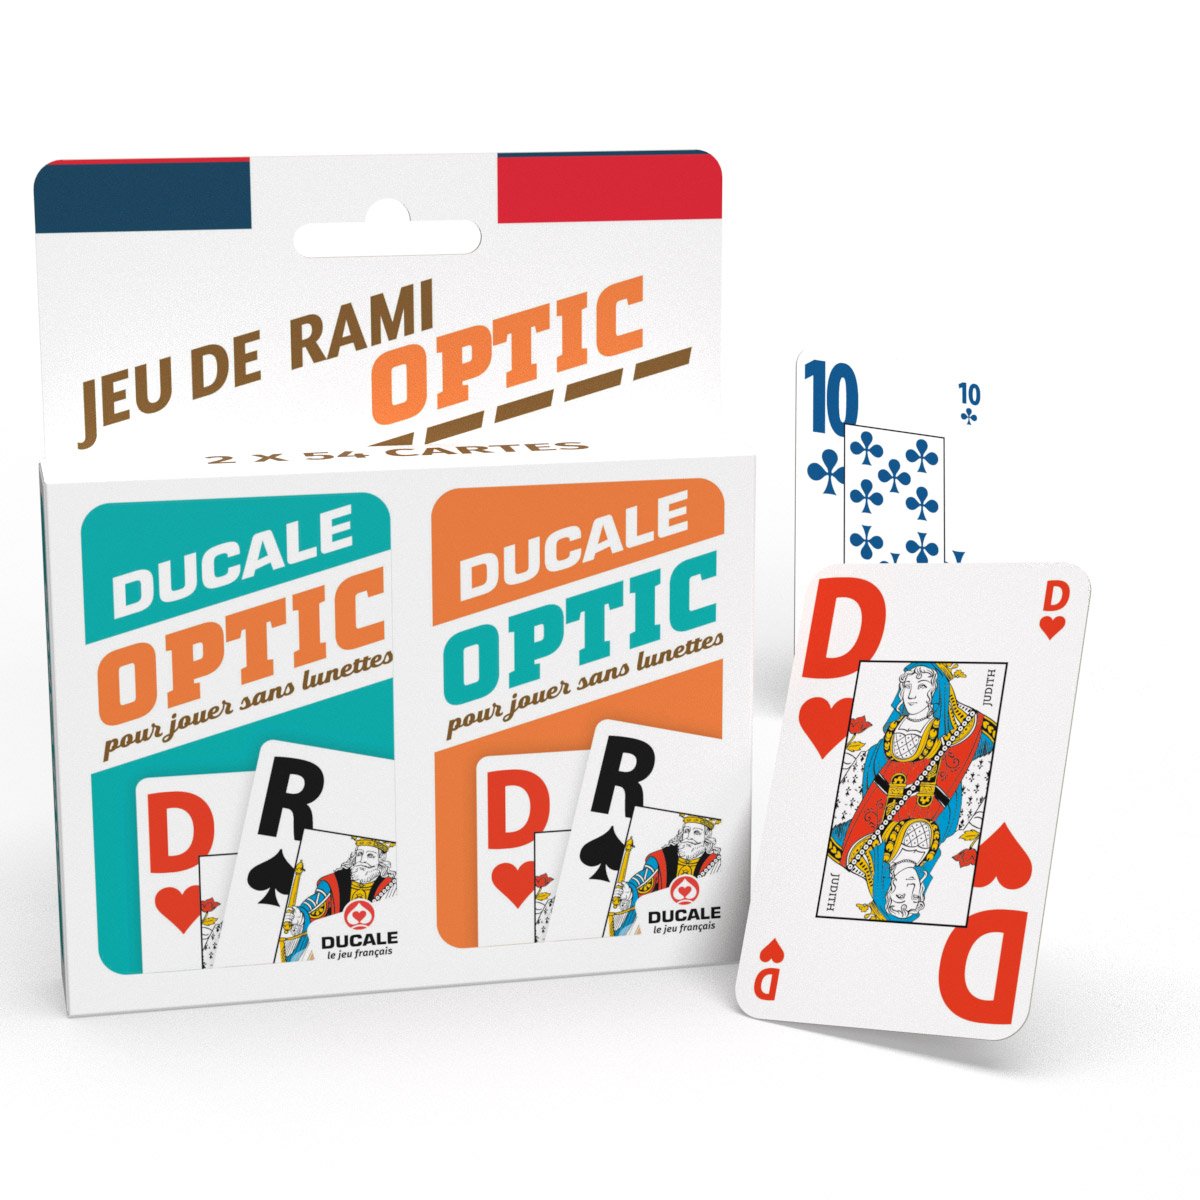 Jeu de Rami - Ducale Optic - La Grande Récré